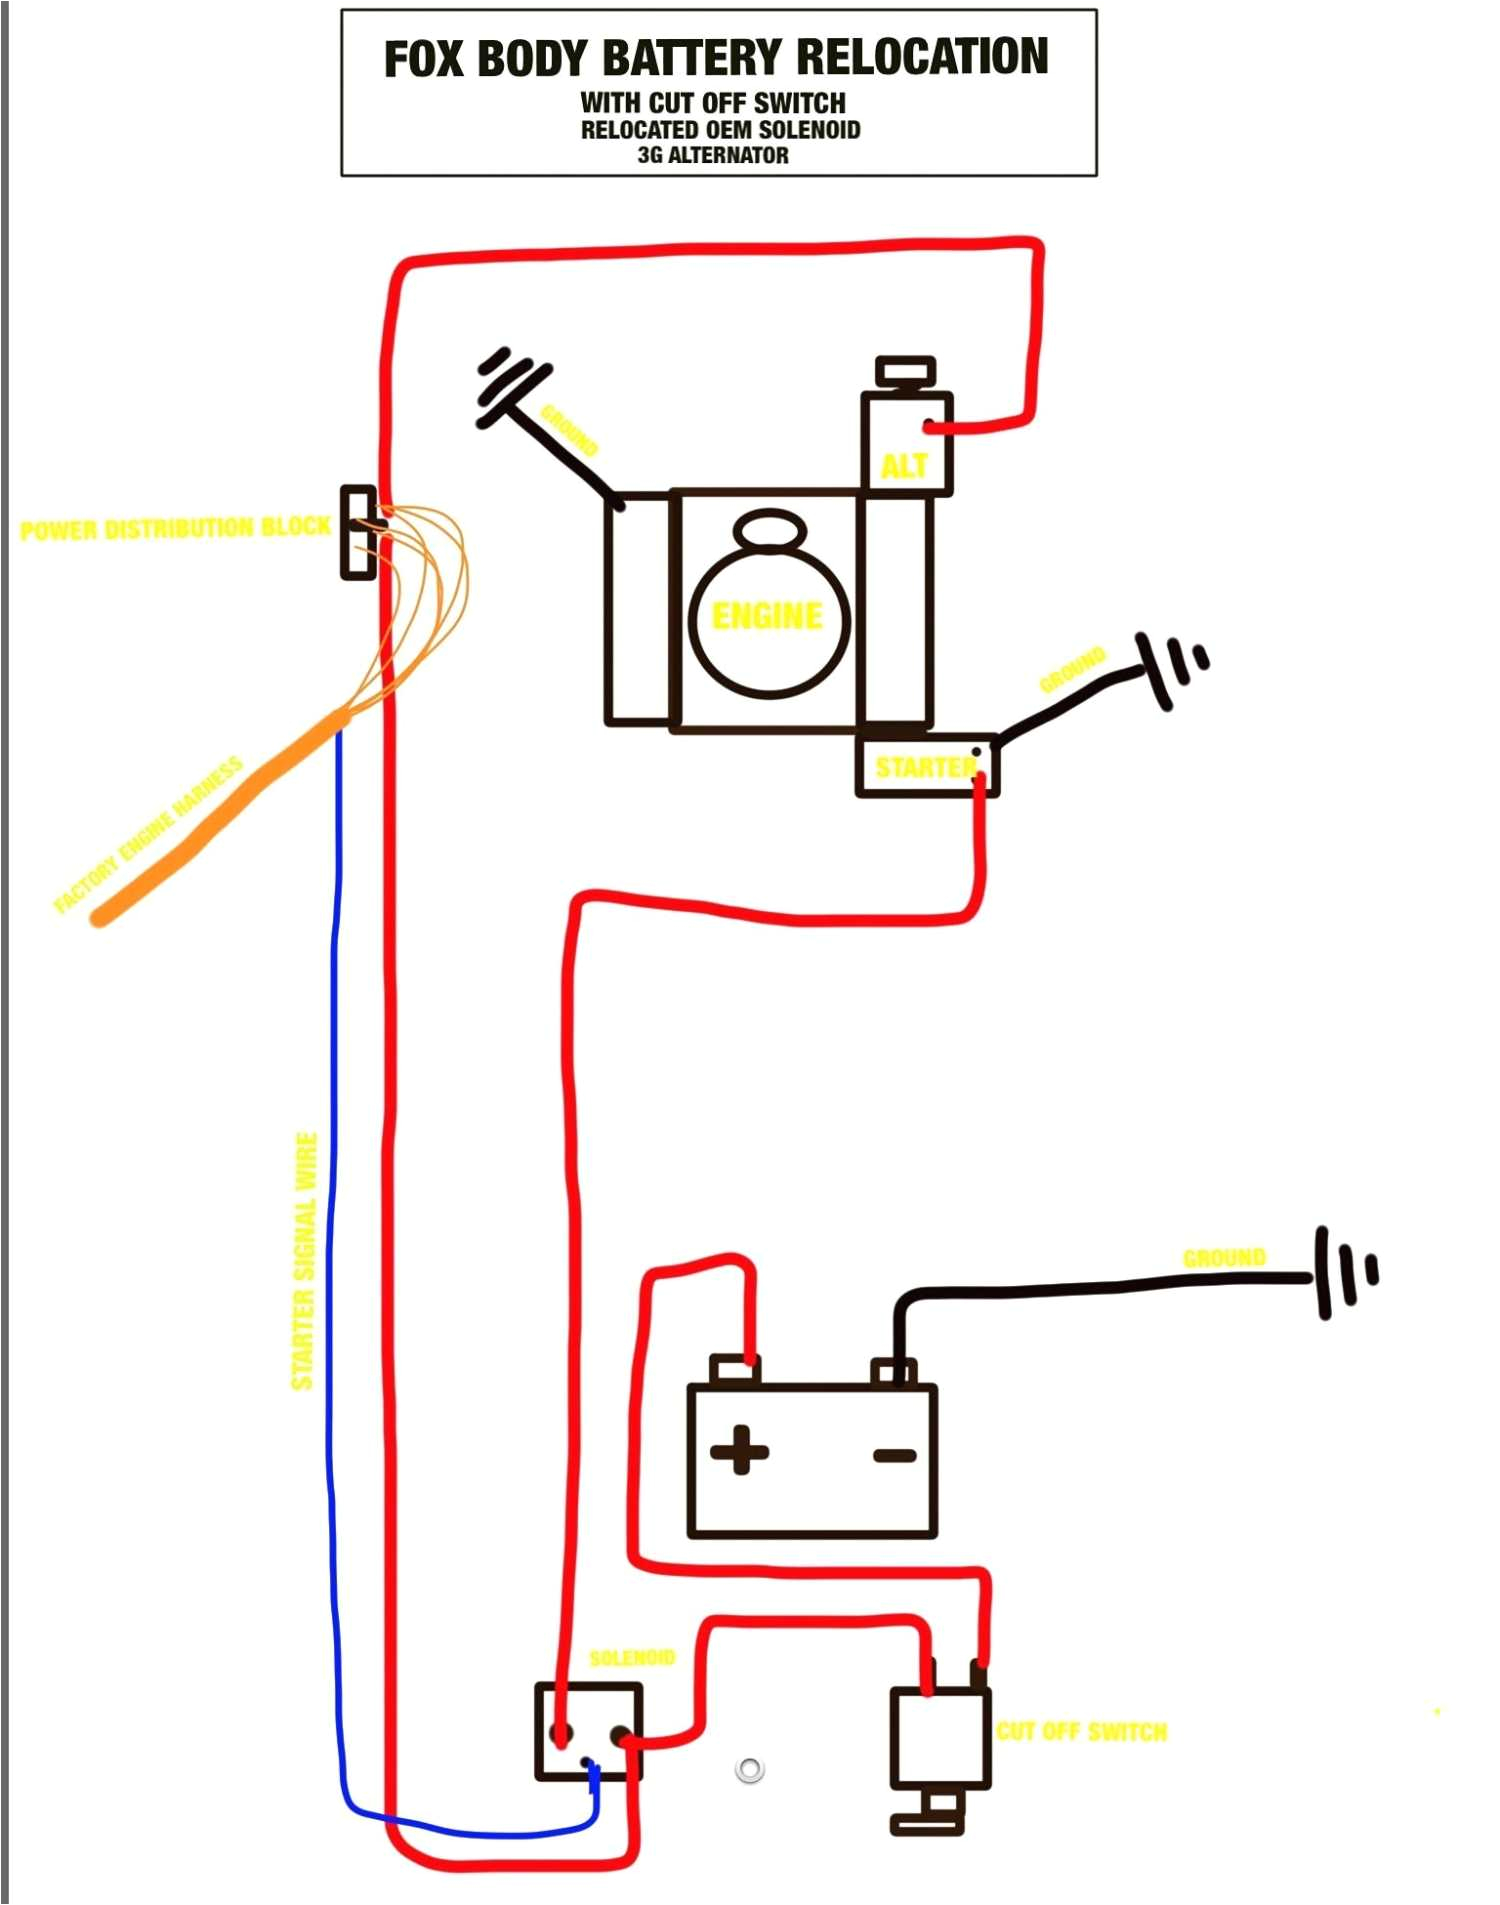 3 battery wiring diagram rv my wiring diagram 3 battery wiring diagram in rv wiring diagram